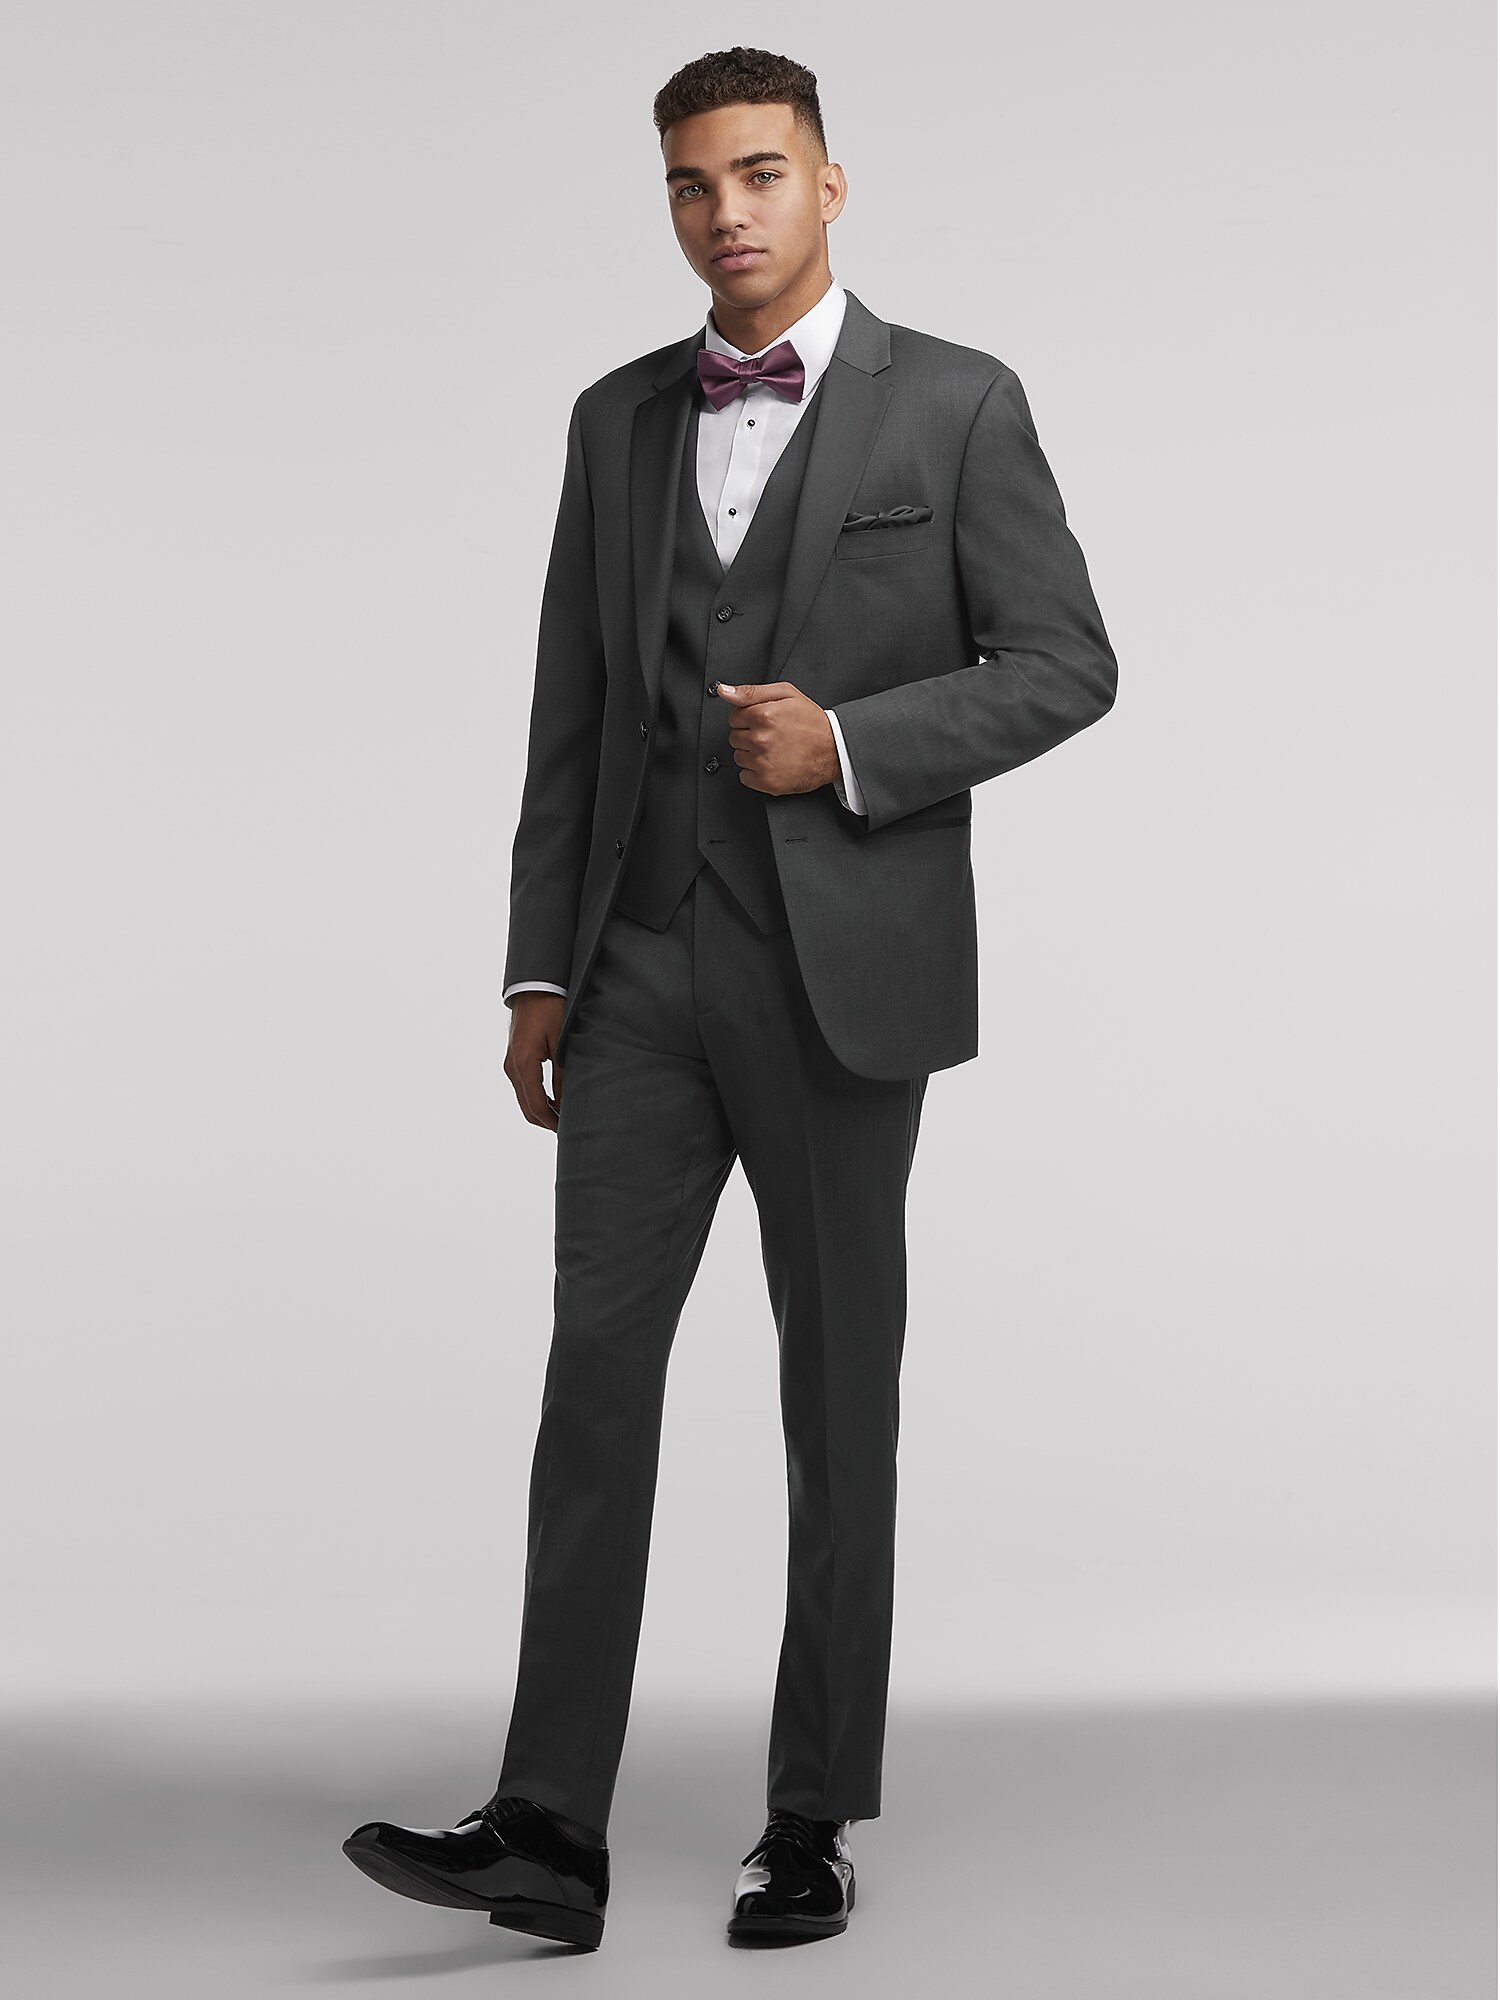 Performance Gray Tux by Calvin Klein | Tuxedo Rental